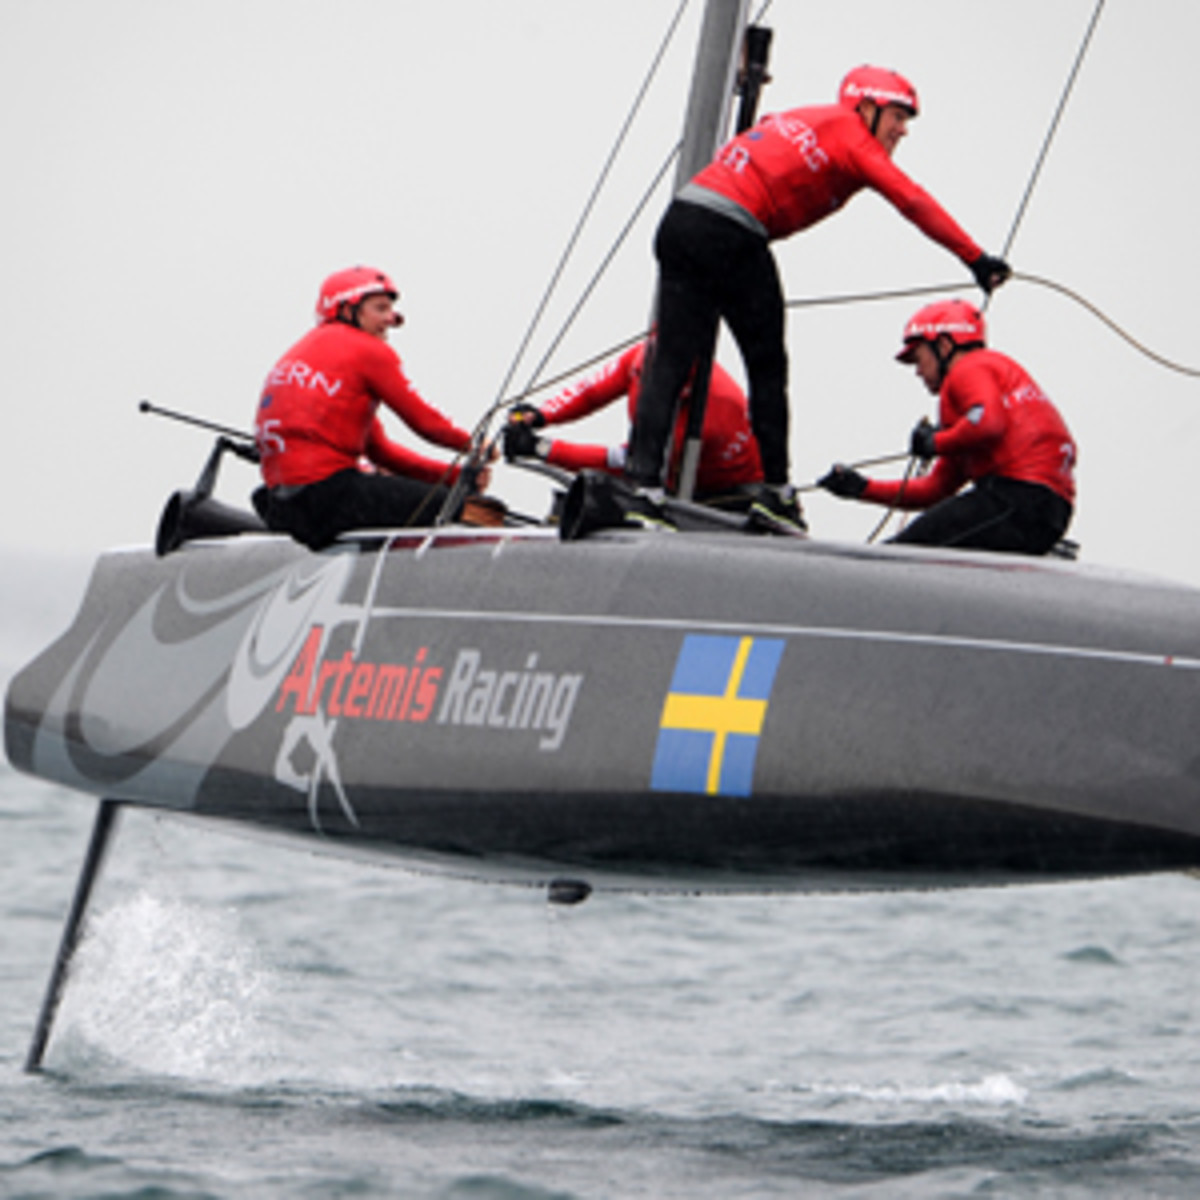 The Team Artemis catamaran raced in the America's Cup Series in April 2012. (Jacopo Raule/Getty Images)